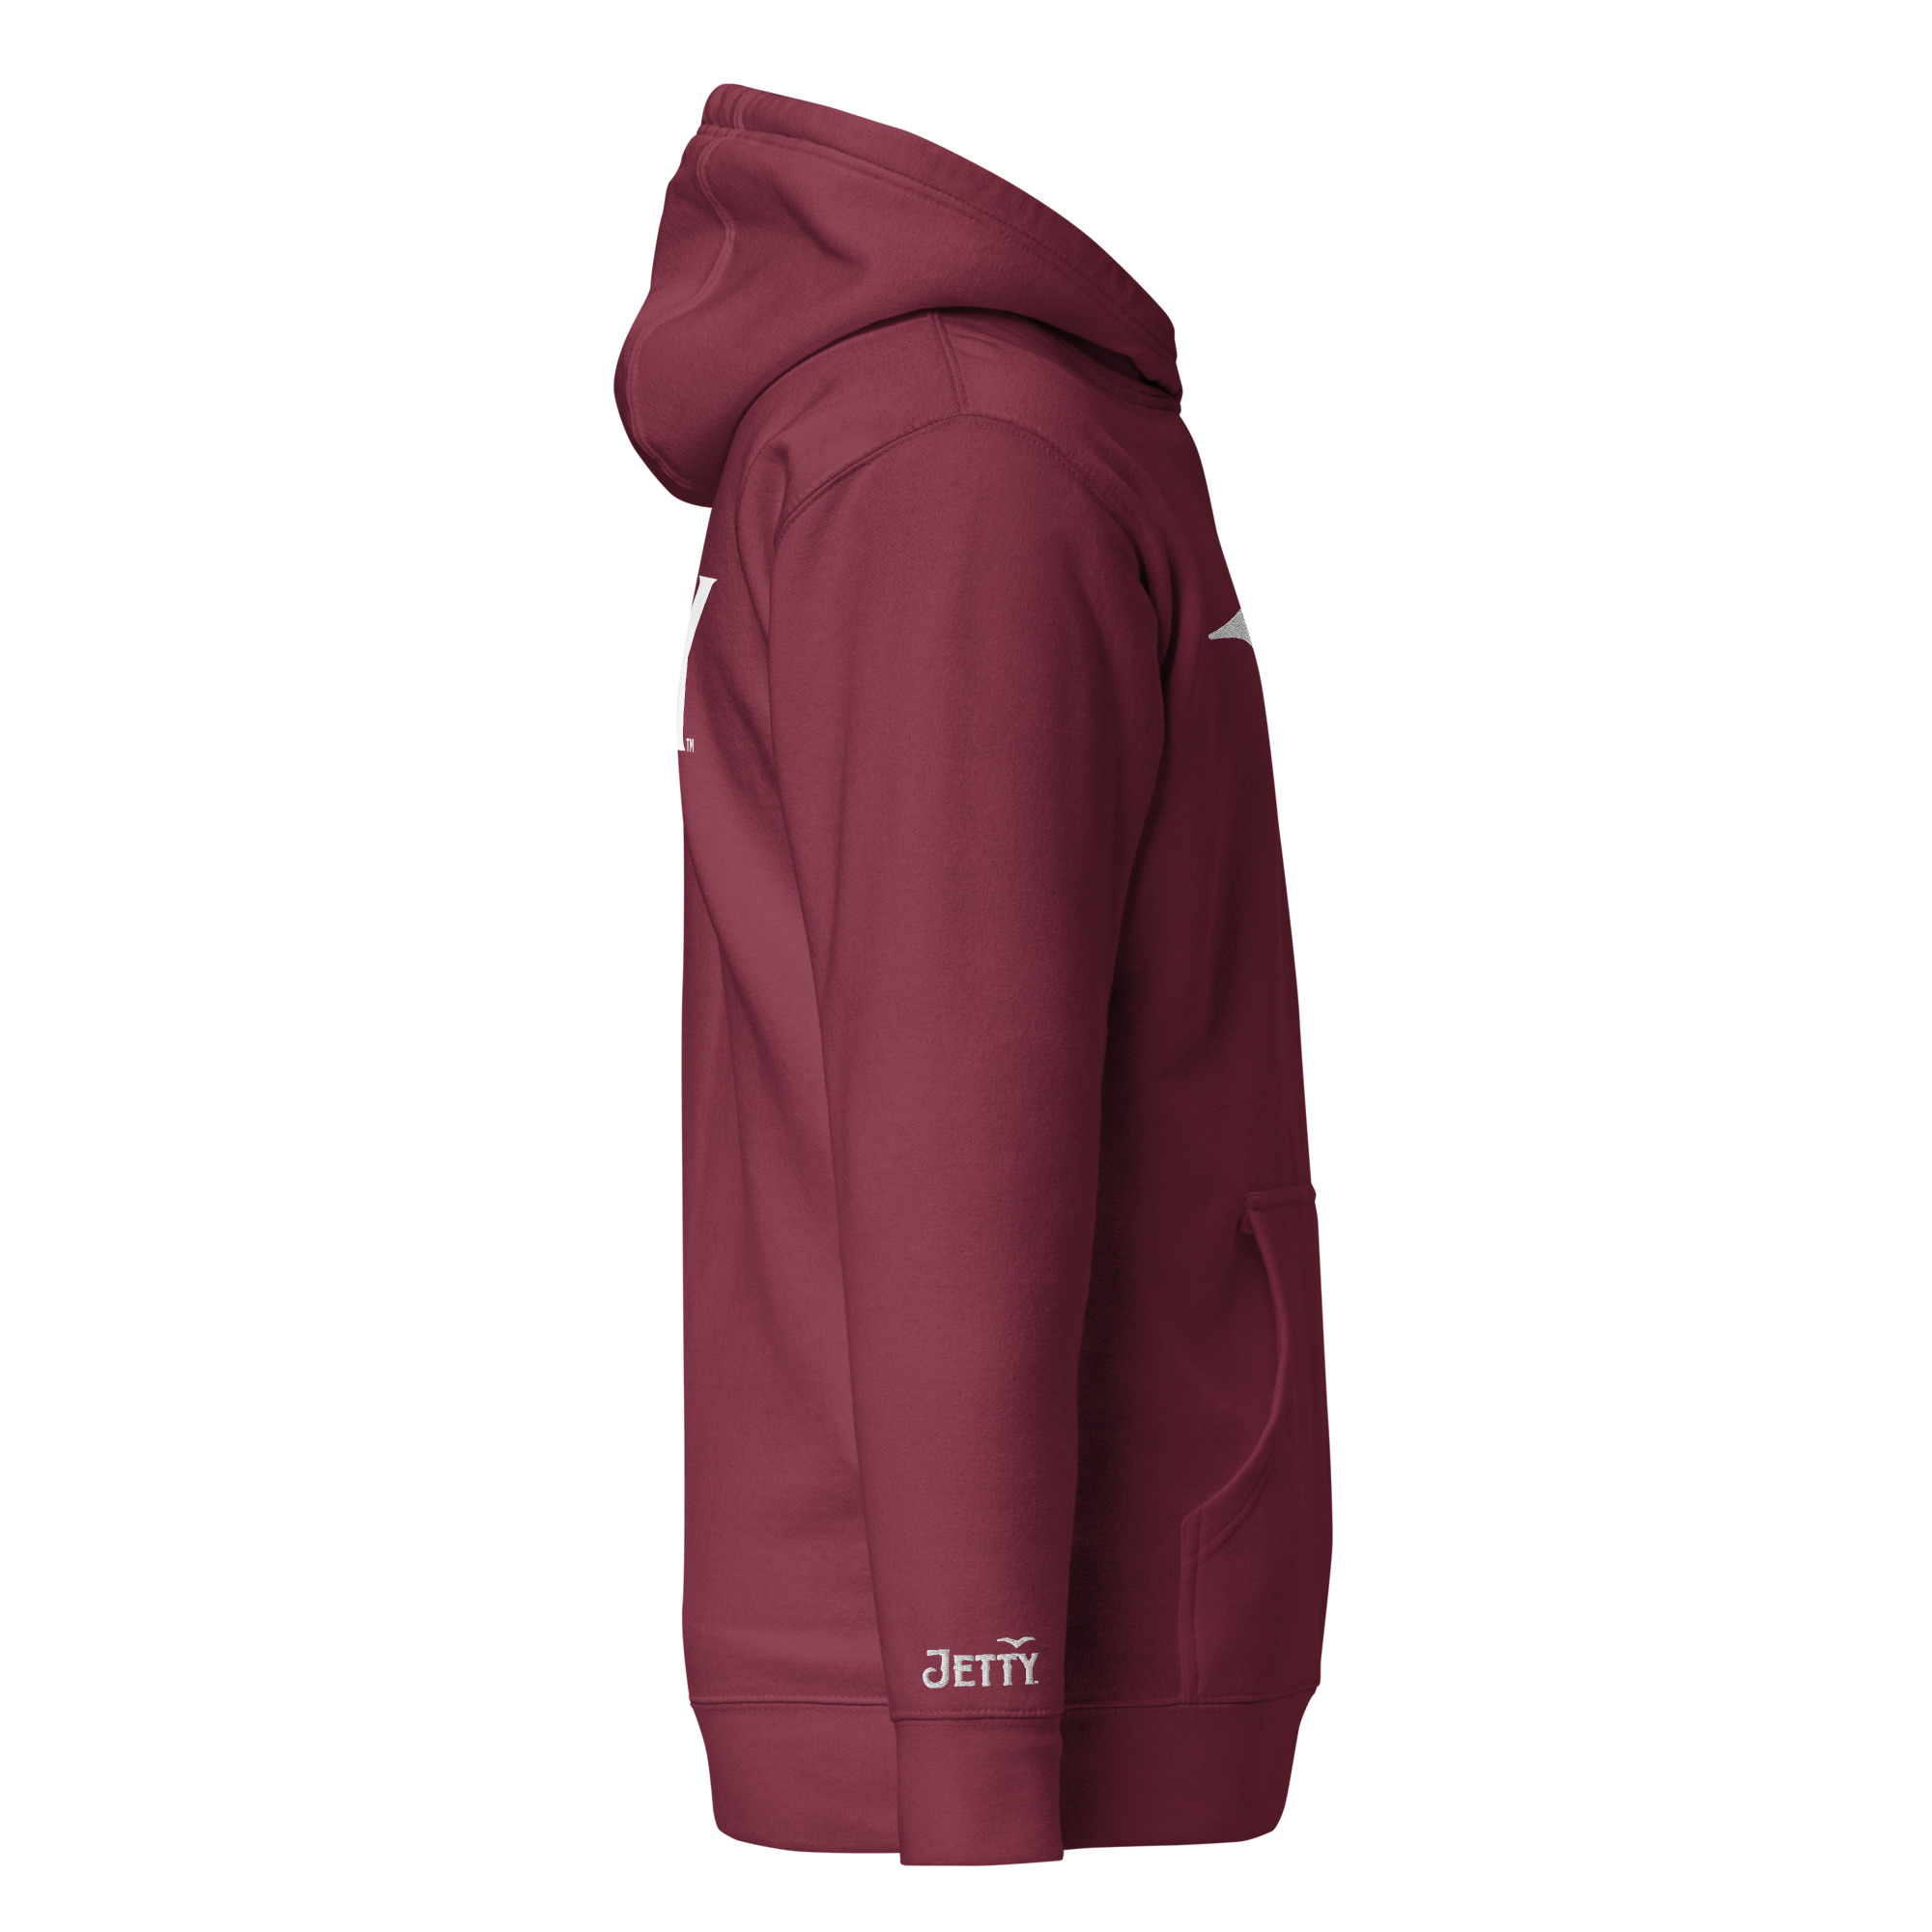 unisex-premium-hoodie-maroon-right-63e3e31928e43.jpg